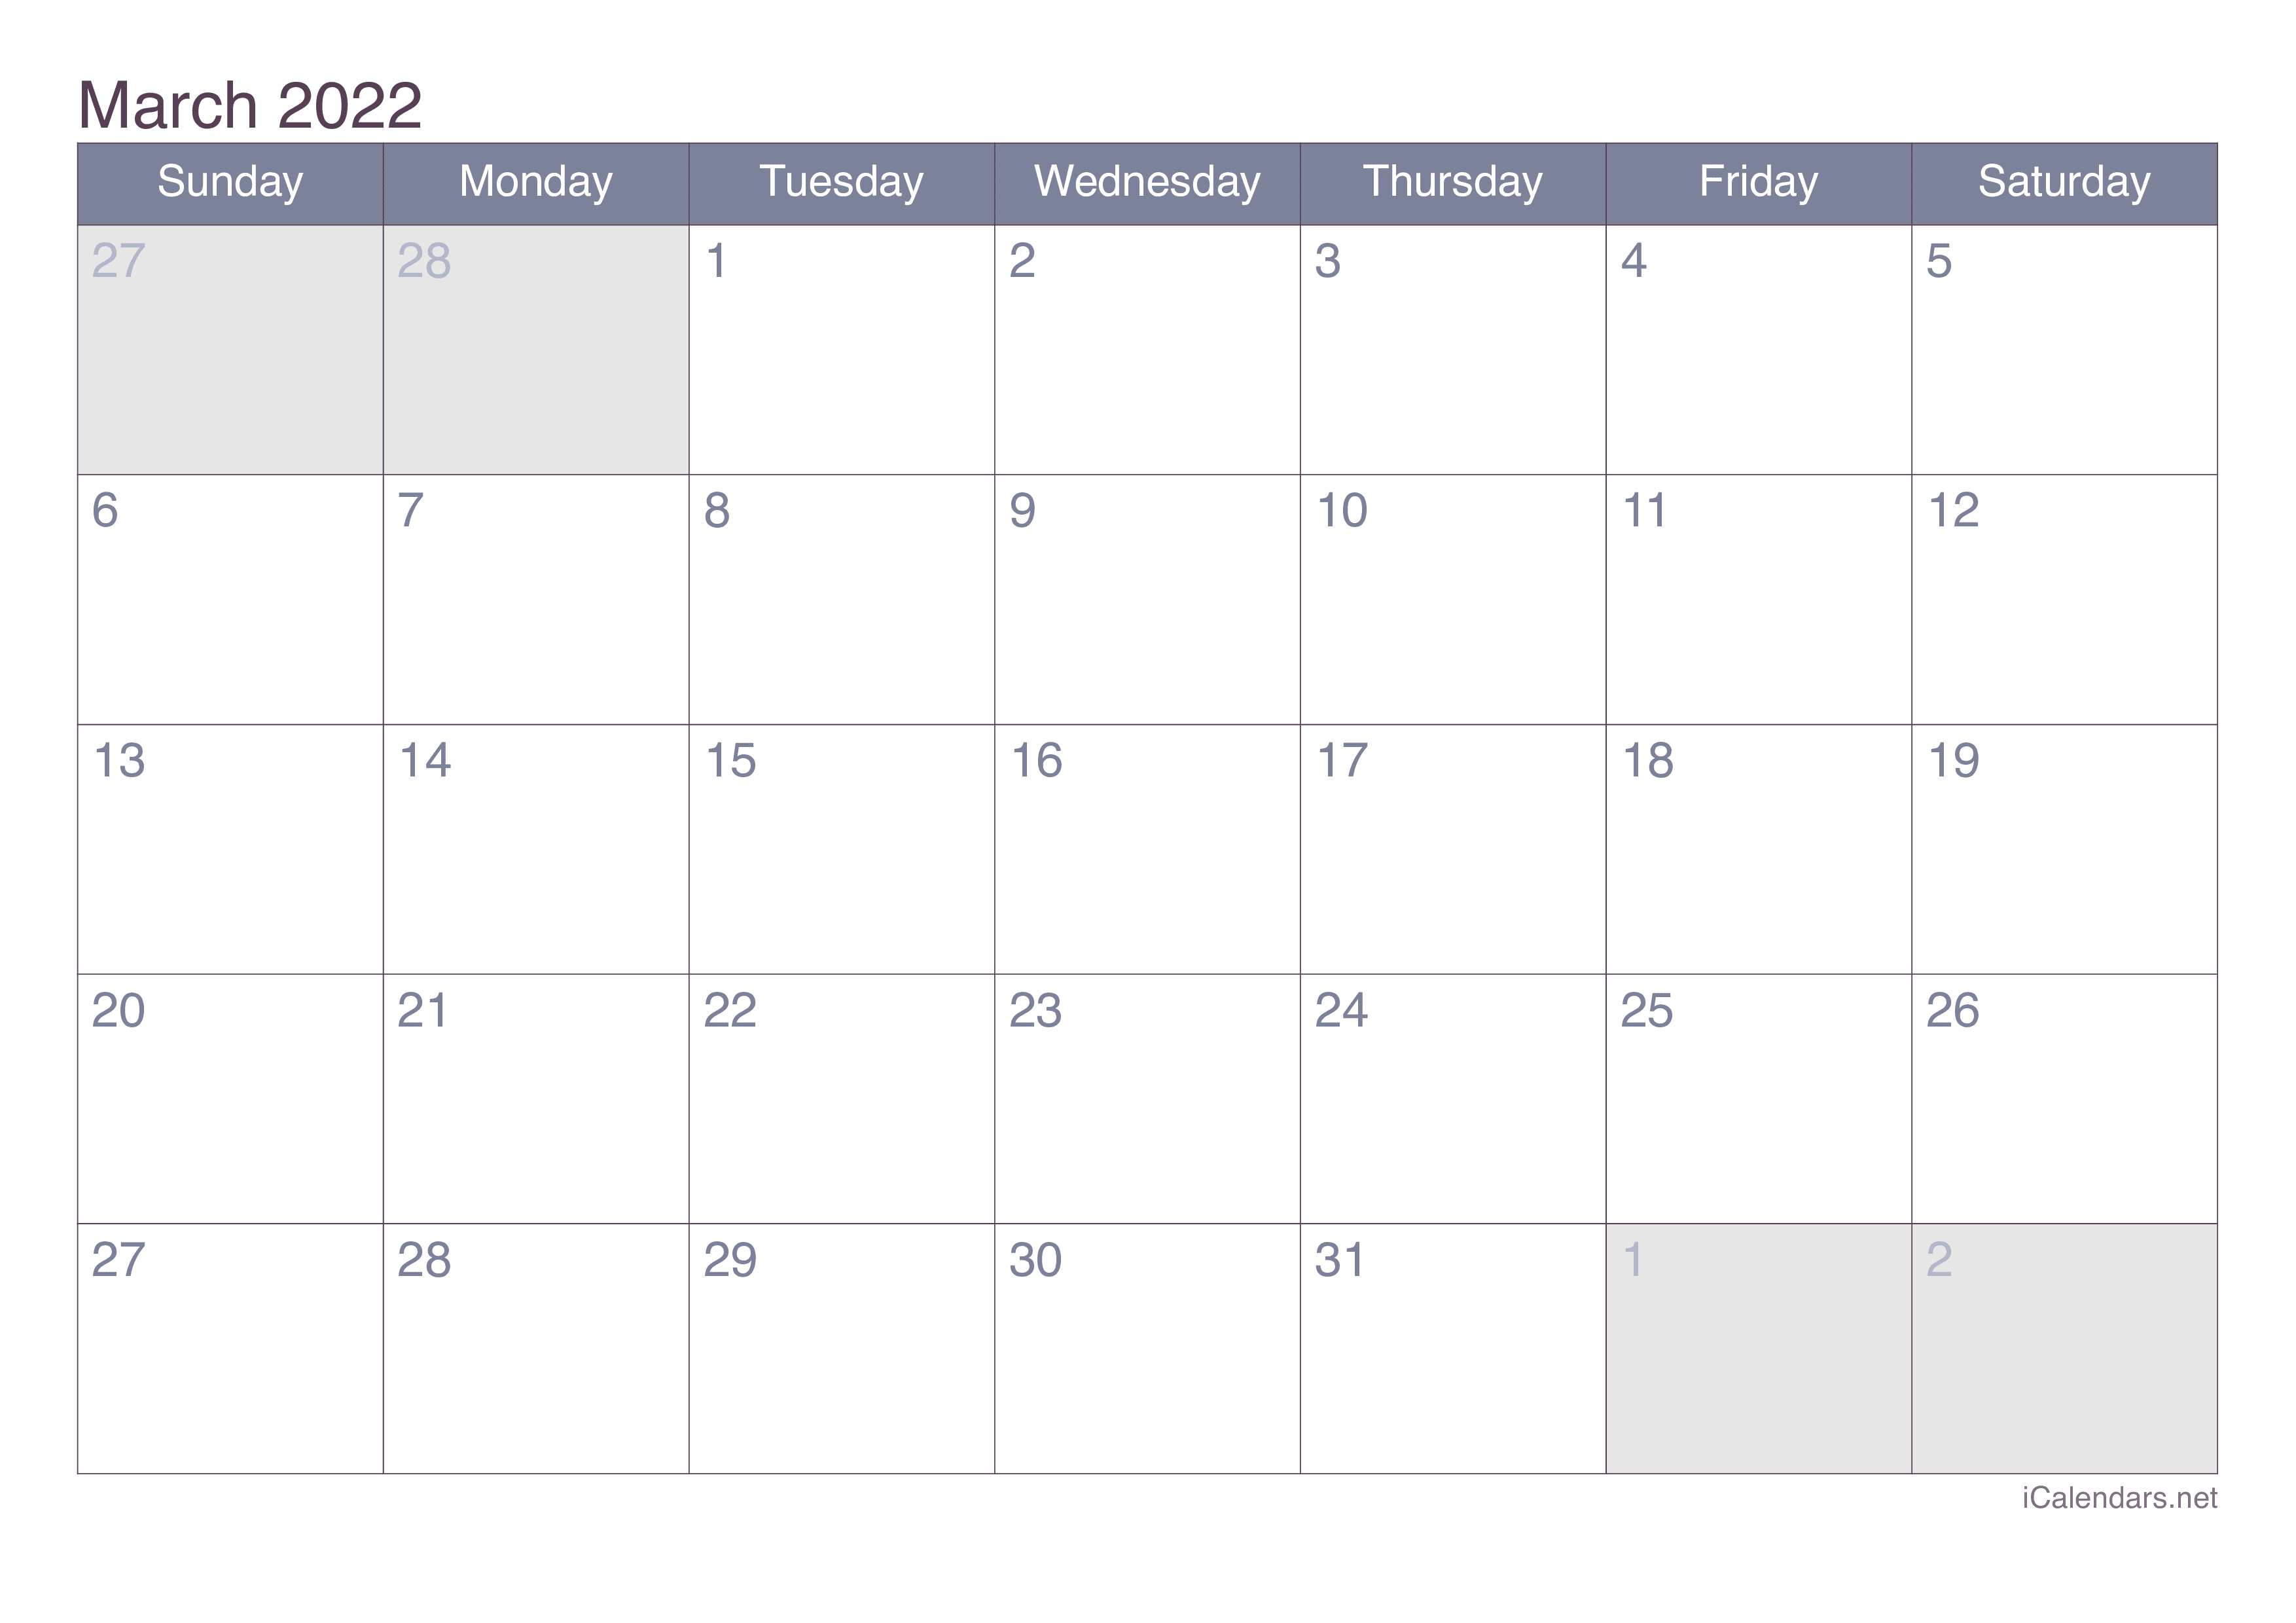 Print March 2022 Calendar March 2022 Printable Calendar - Icalendars.net